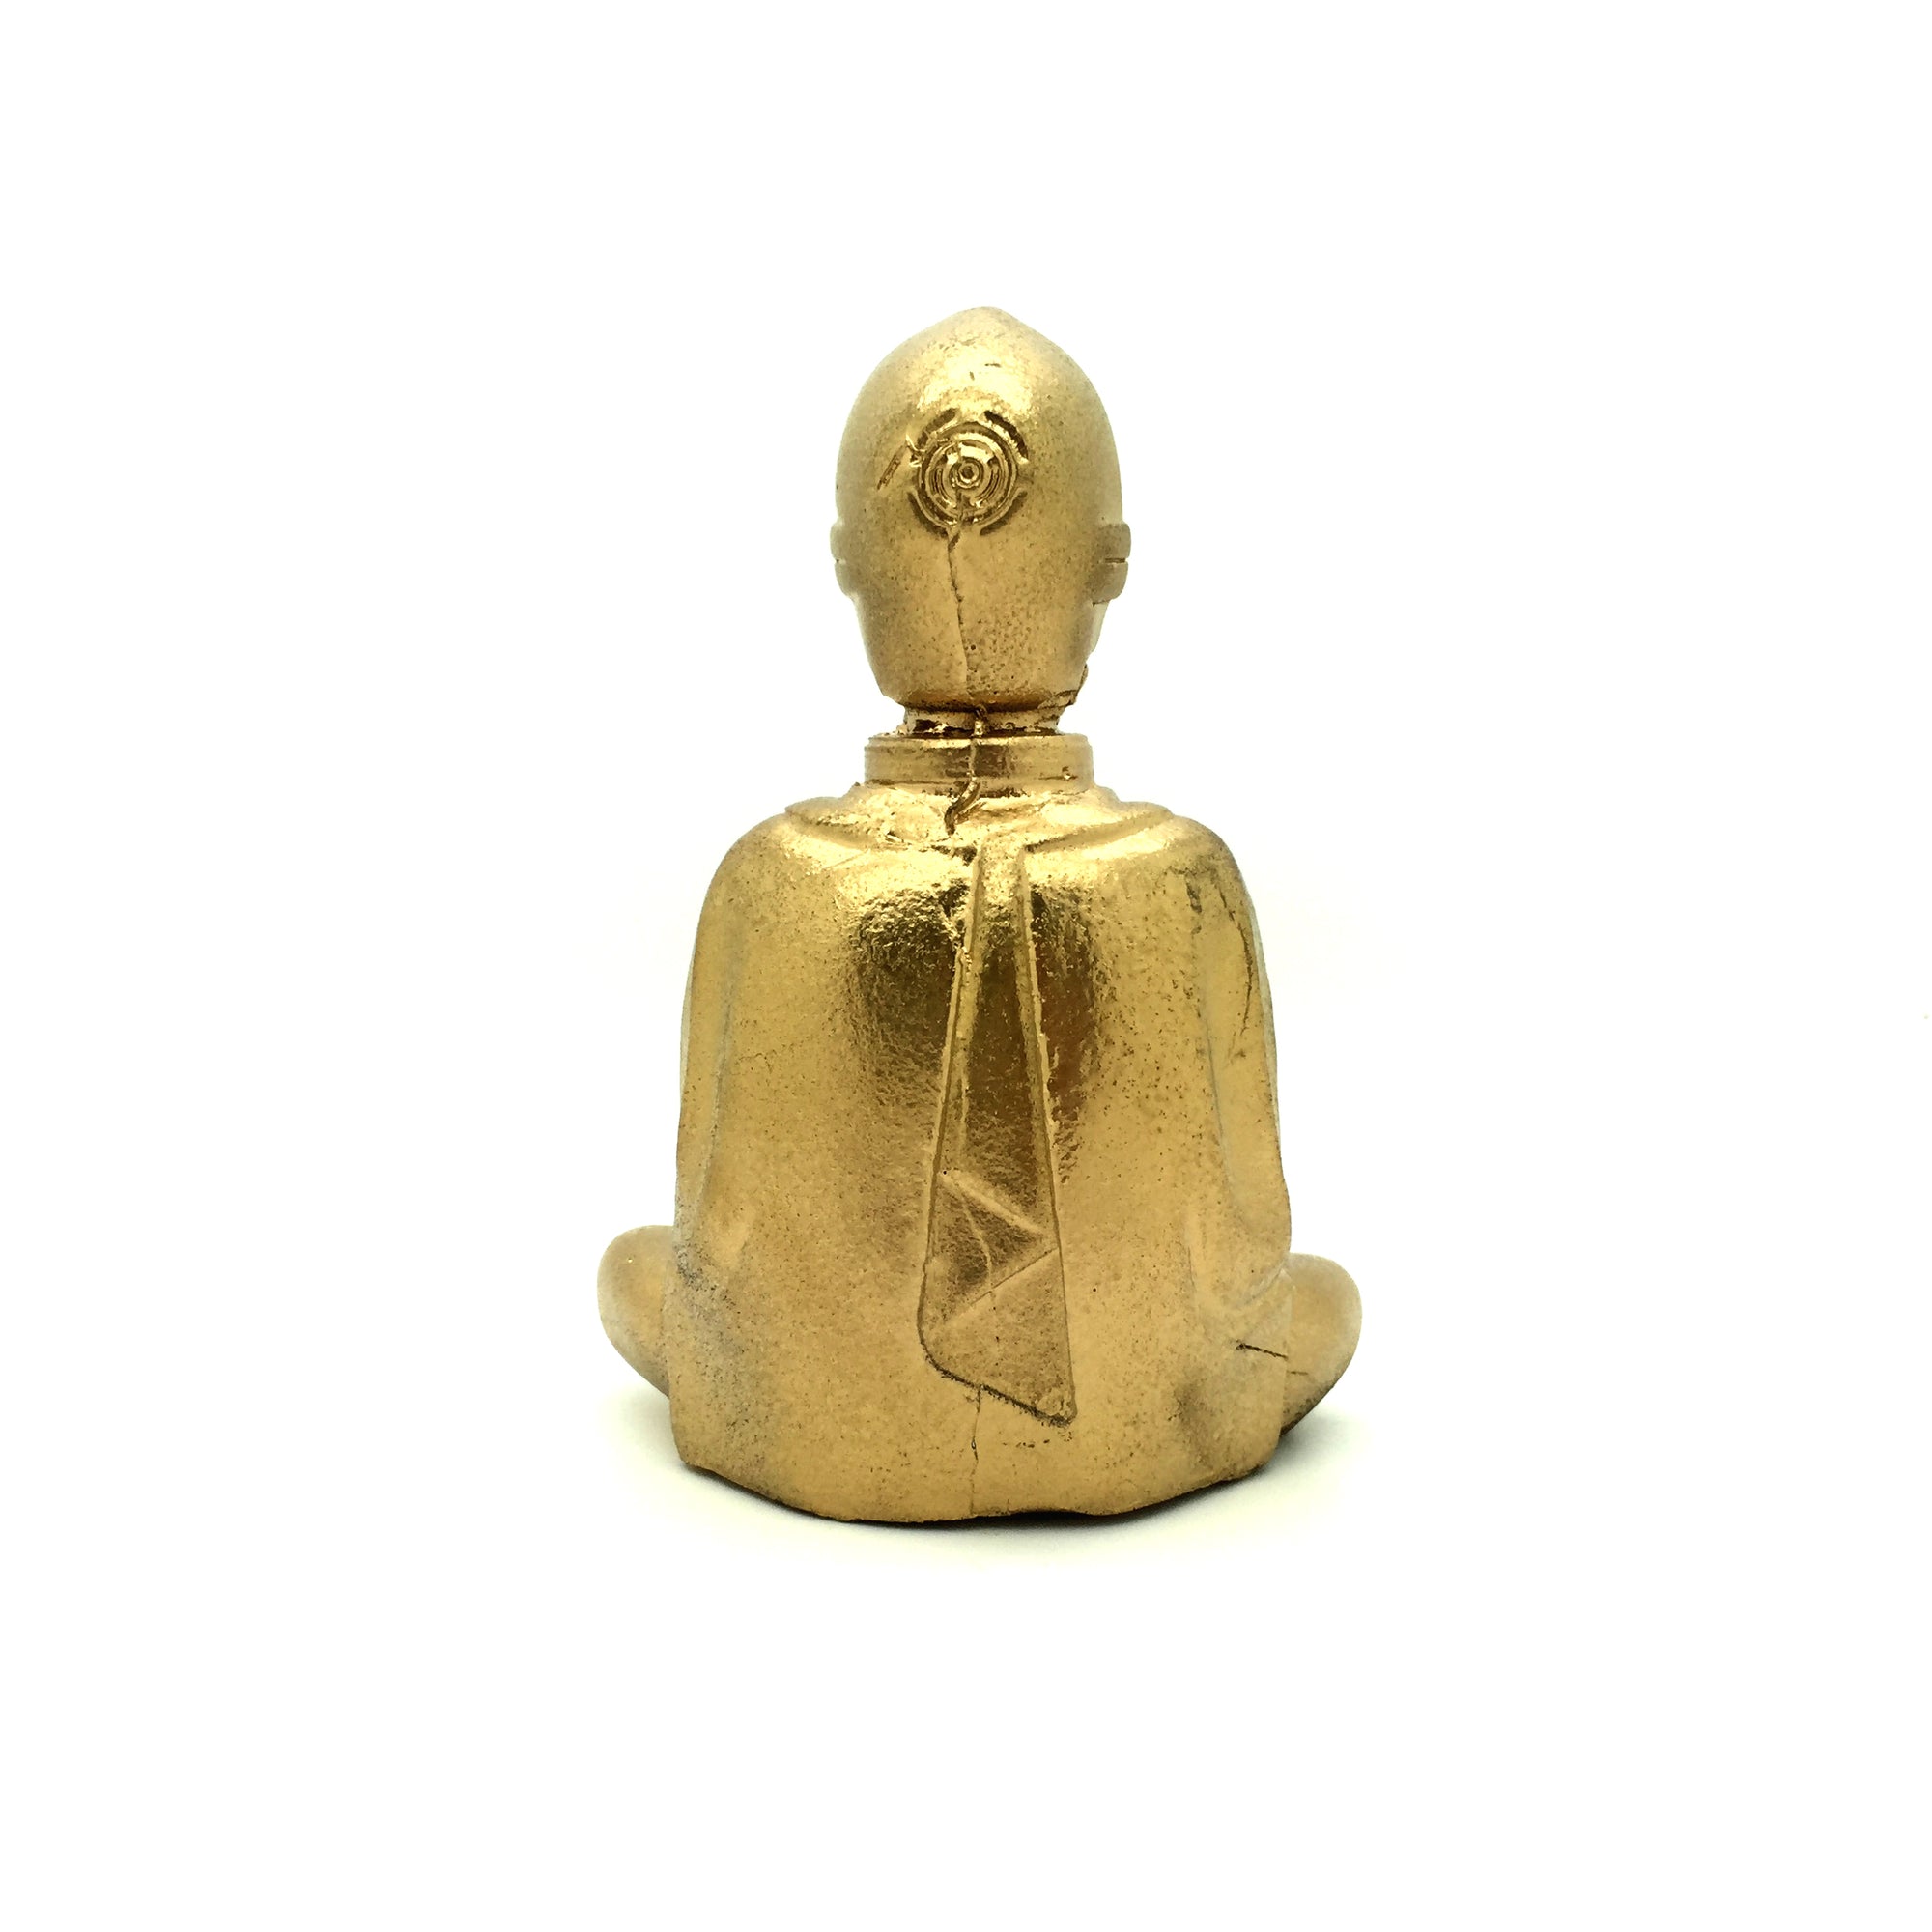 Gold C-3P0 Buddha 4" Figure by Modulicious